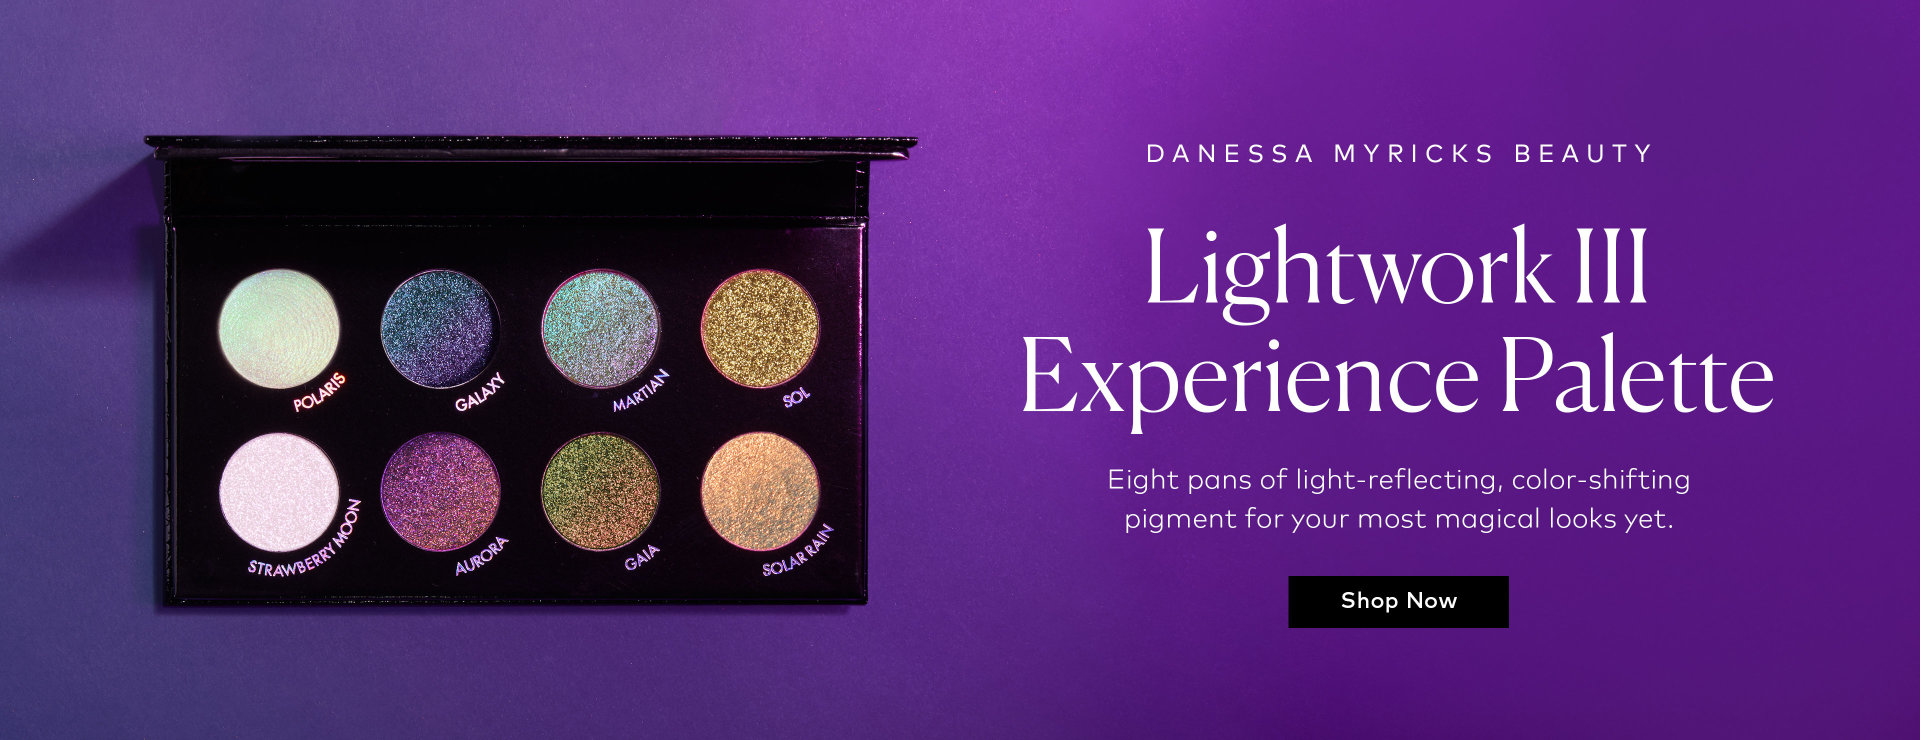 Shop the Danessa Myricks Beauty Lightwork III Experience Palette now on Beautylish.com